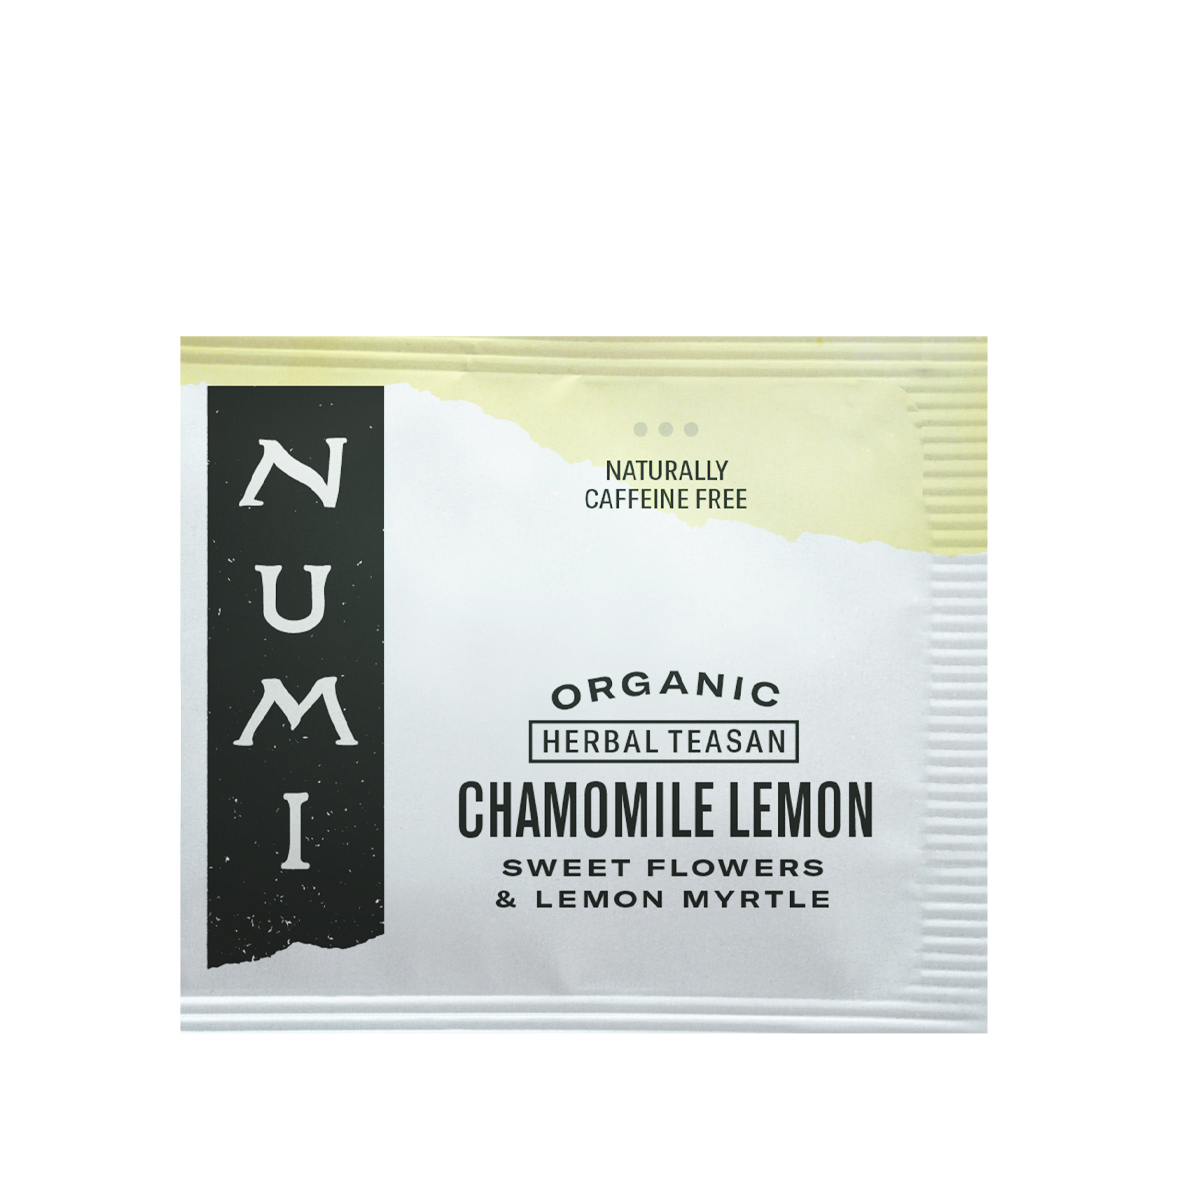 Organic Chamomile Lemon